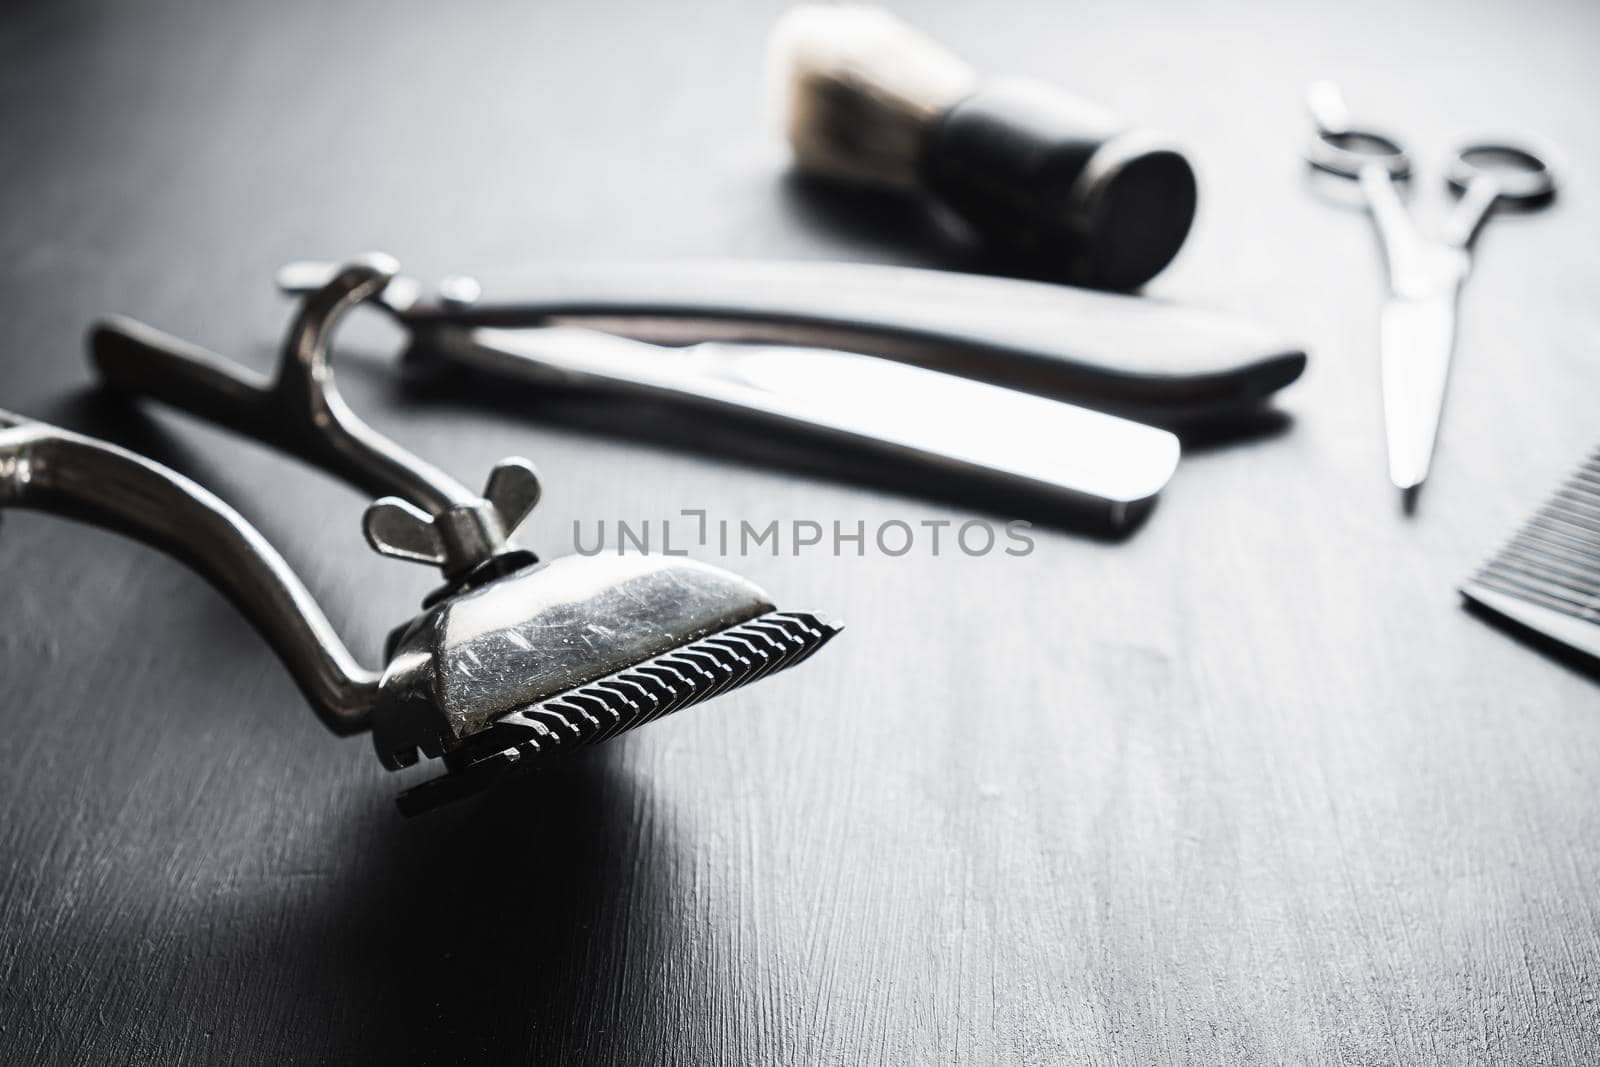 On a black dusty surface are old barber tools. Vintage manual hair clipper comb razor shaving brush shaving brush hairdressing scissors. black monochrome. horizontal.